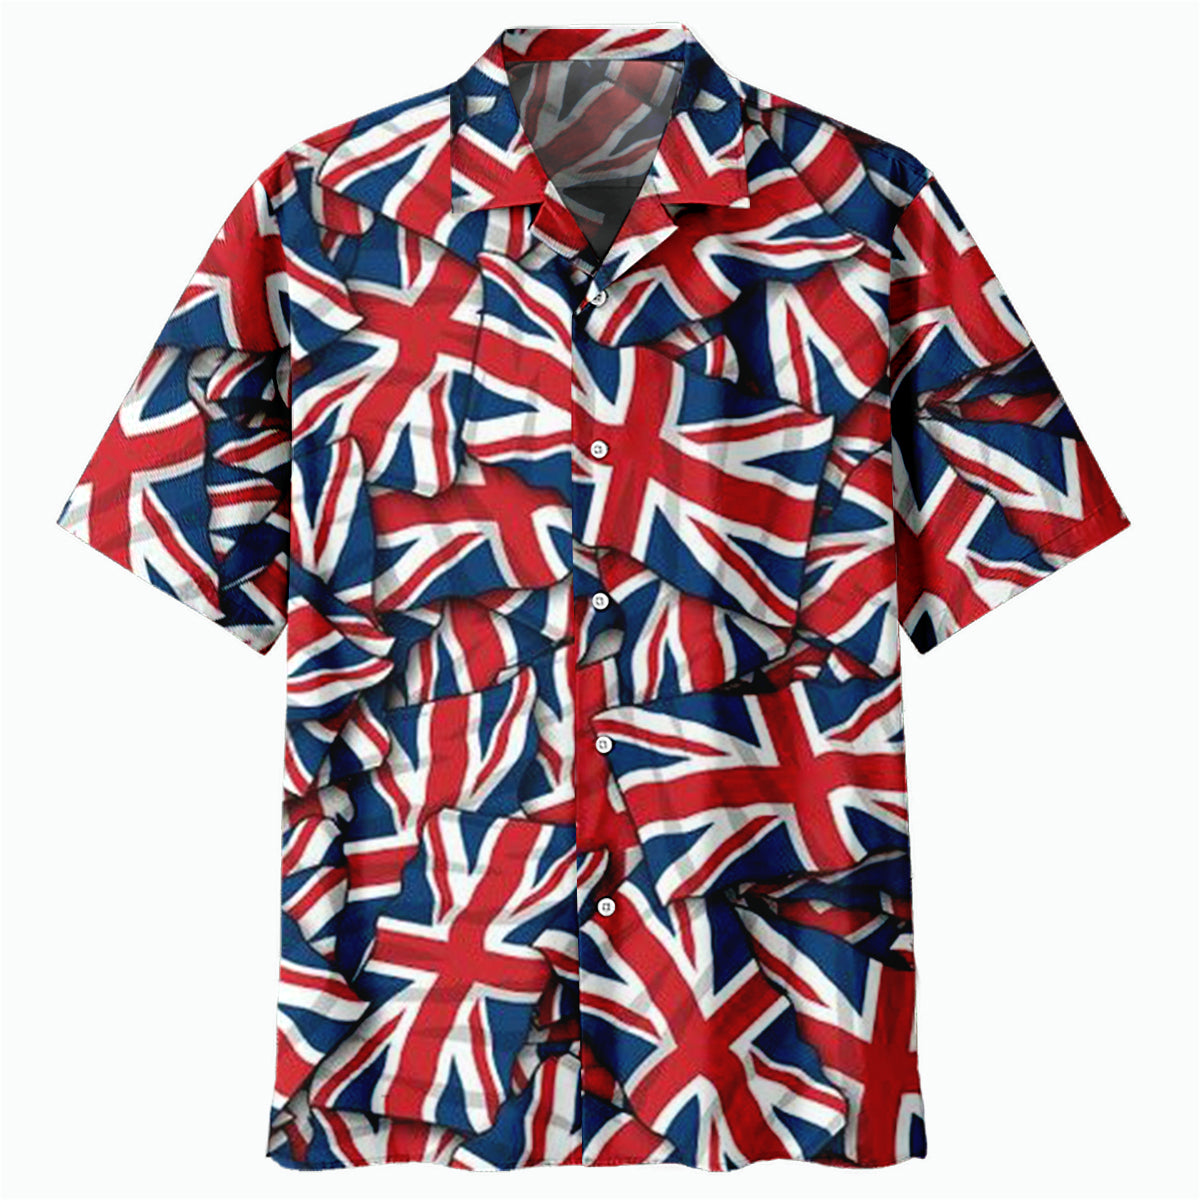 Men's Retro Flag Print Button Up Shirt